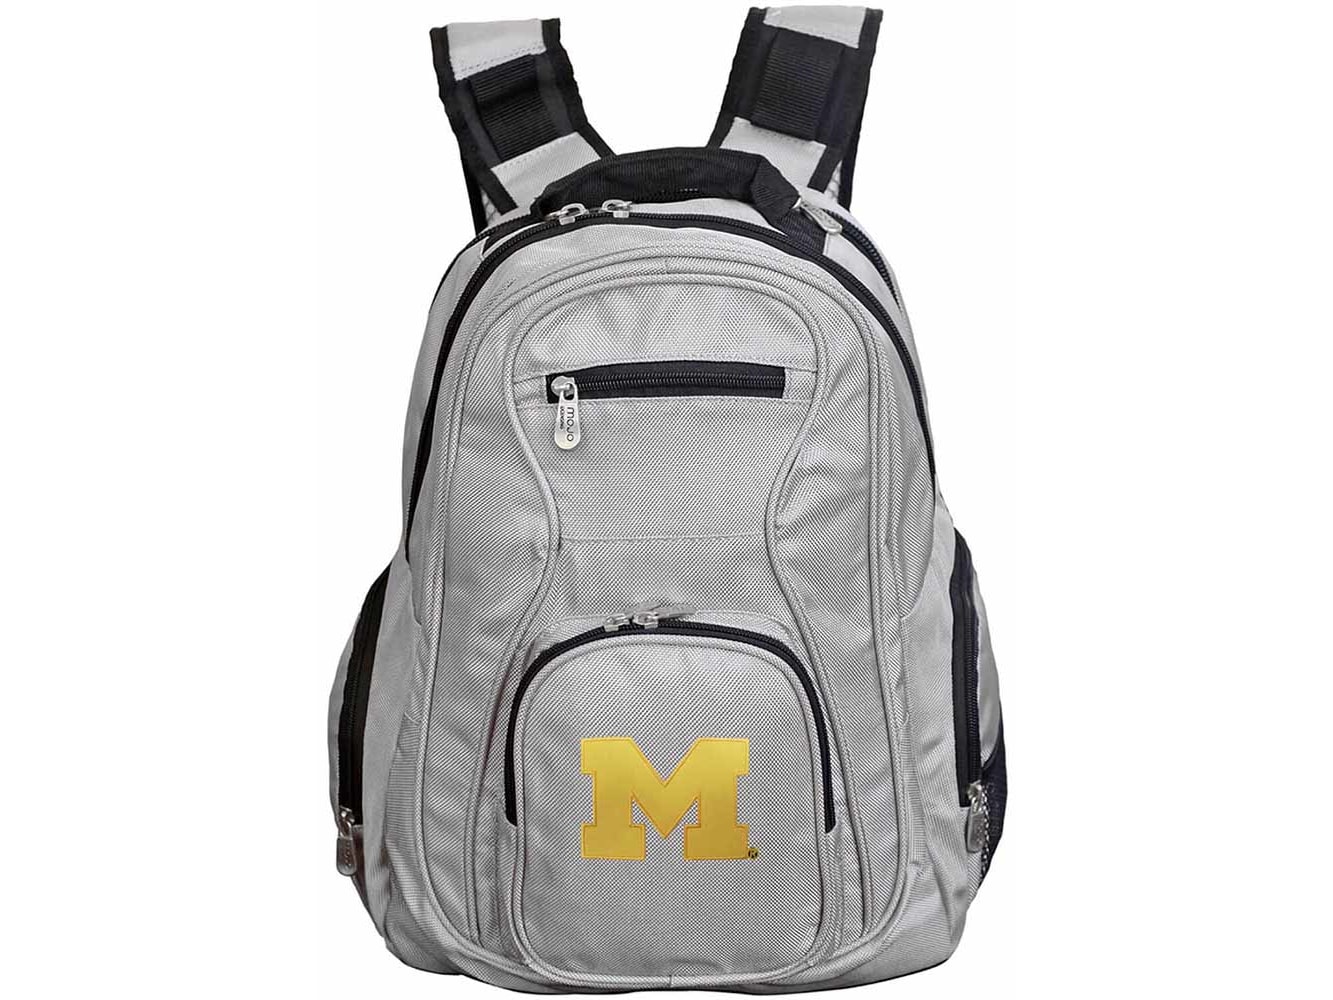 University of Michigan Purses  University of Michigan Bags